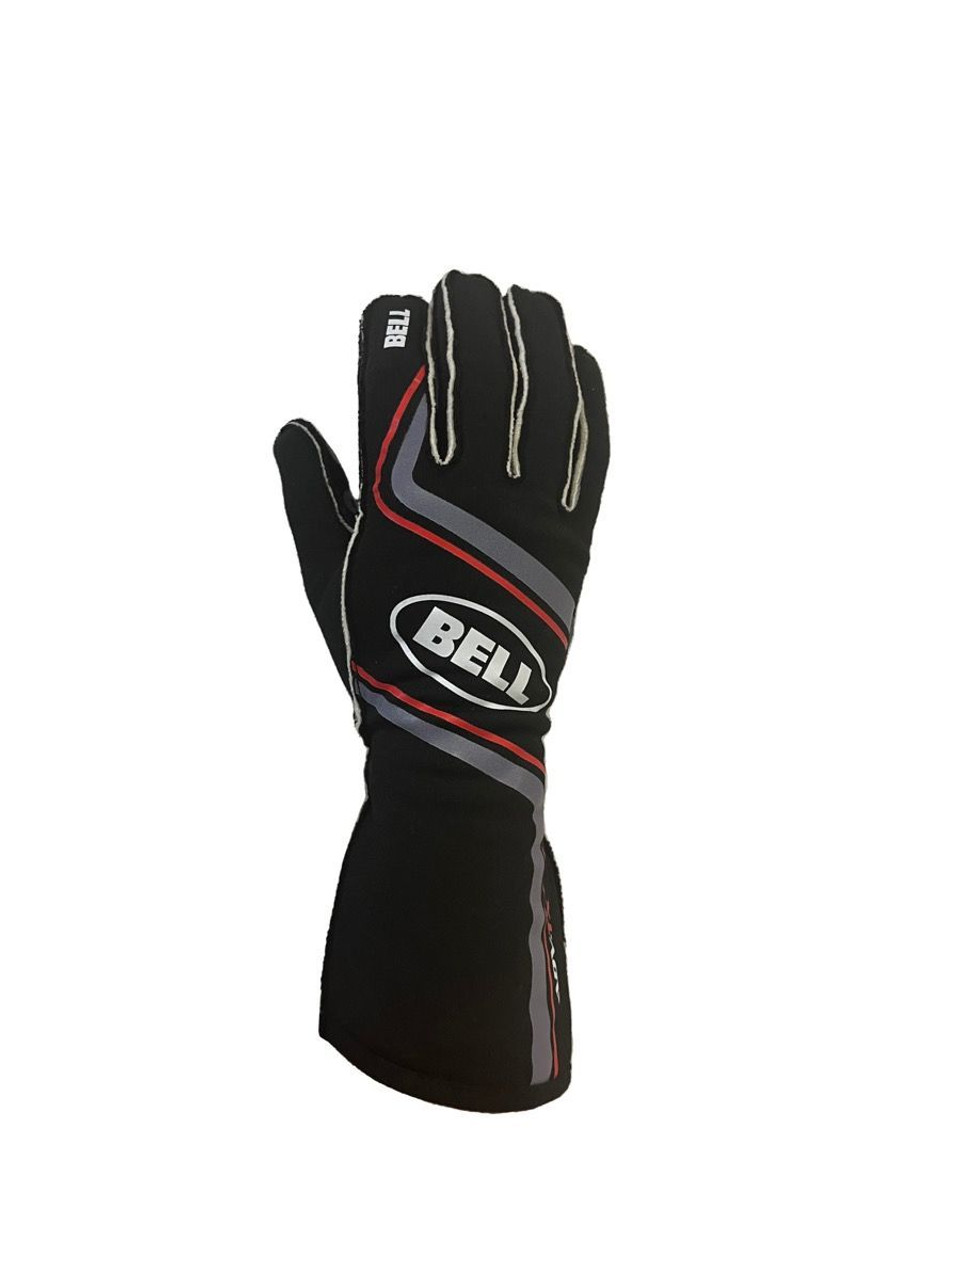 Bell Racing Glove ADV-TX Black/Red 2X Large SFI 3.3/5